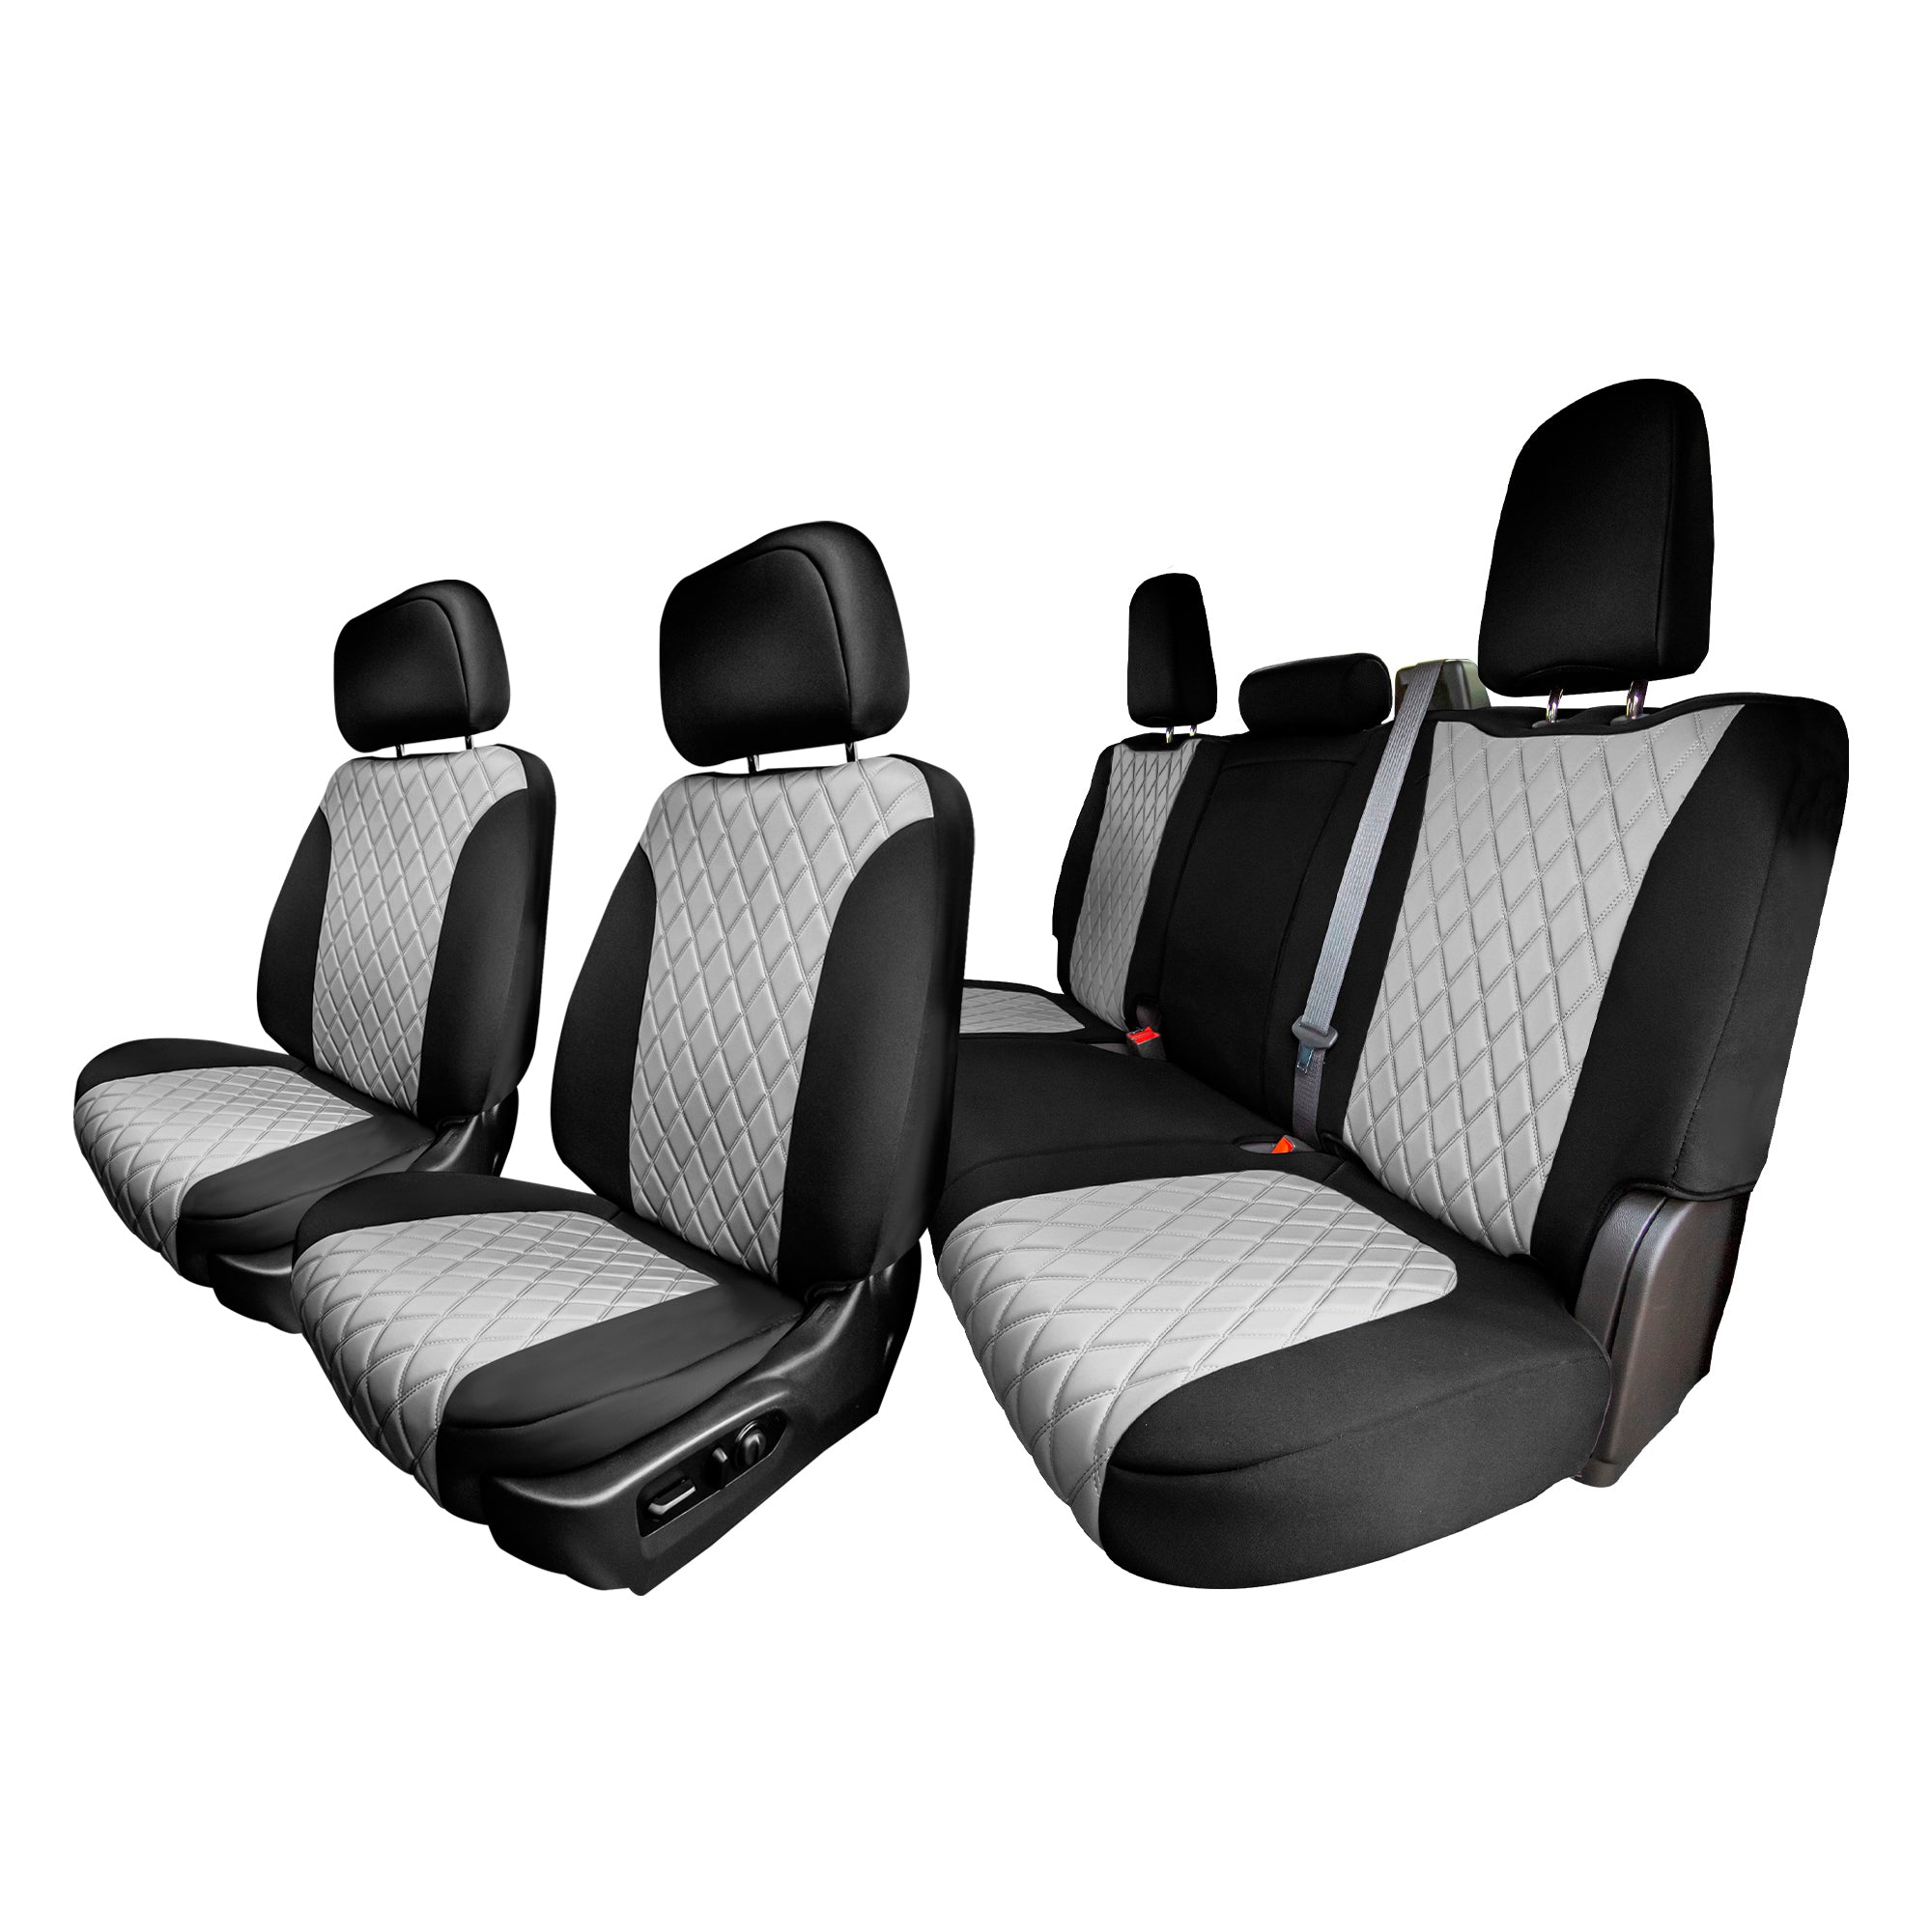 Chevrolet Silverado 1500 2500HD 3500HD WT LT - 2019 - 2023 - Full Set Seat Covers - Gray Ultraflex Neoprene